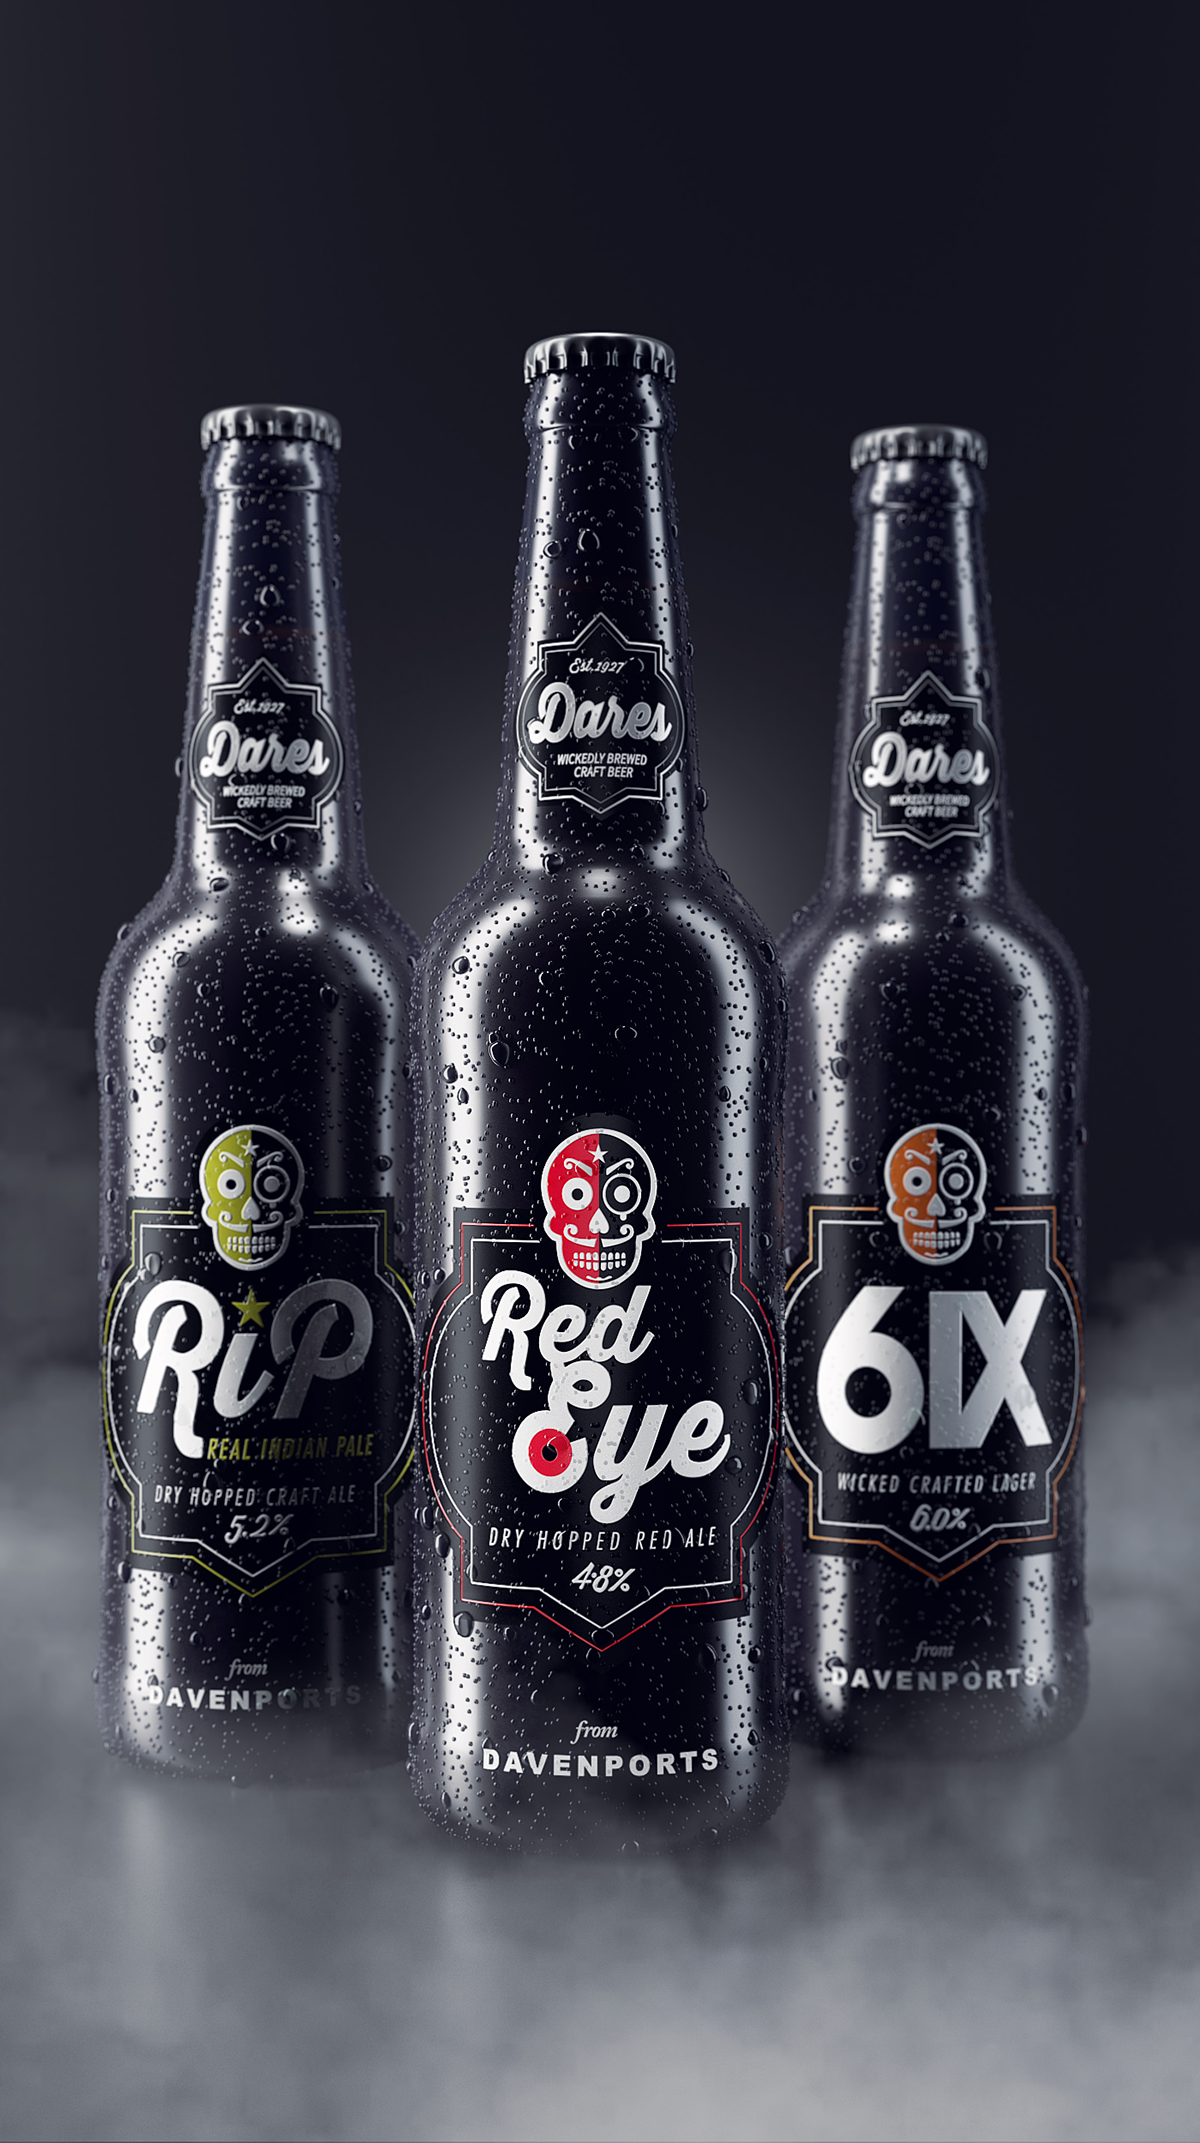 Davenports dares beer be beverages CGI bottle 3dsmax vray UK